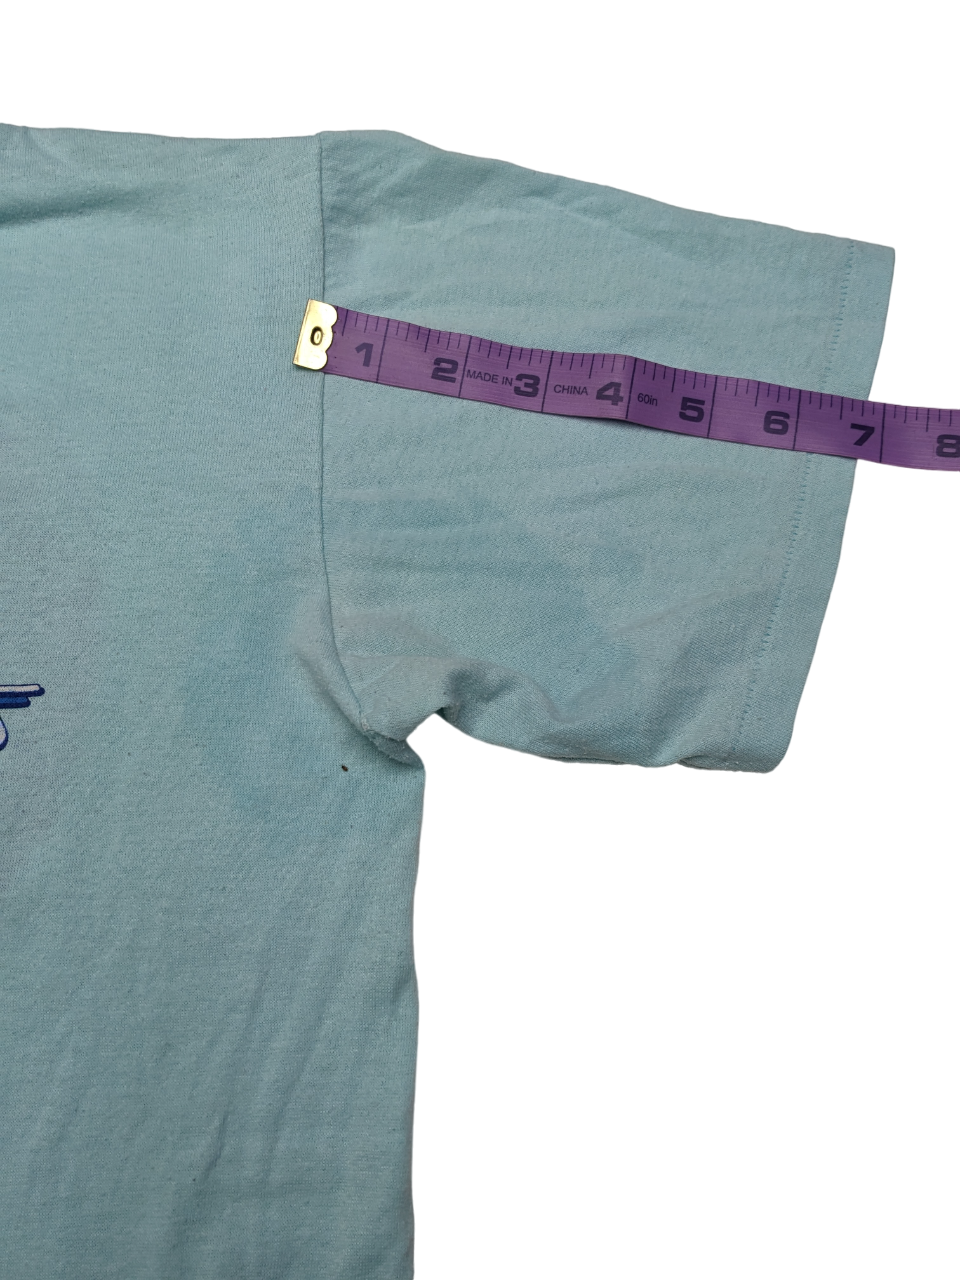 Vintage Beach Boys T-Shirt 1 pc 1 lb D0416224